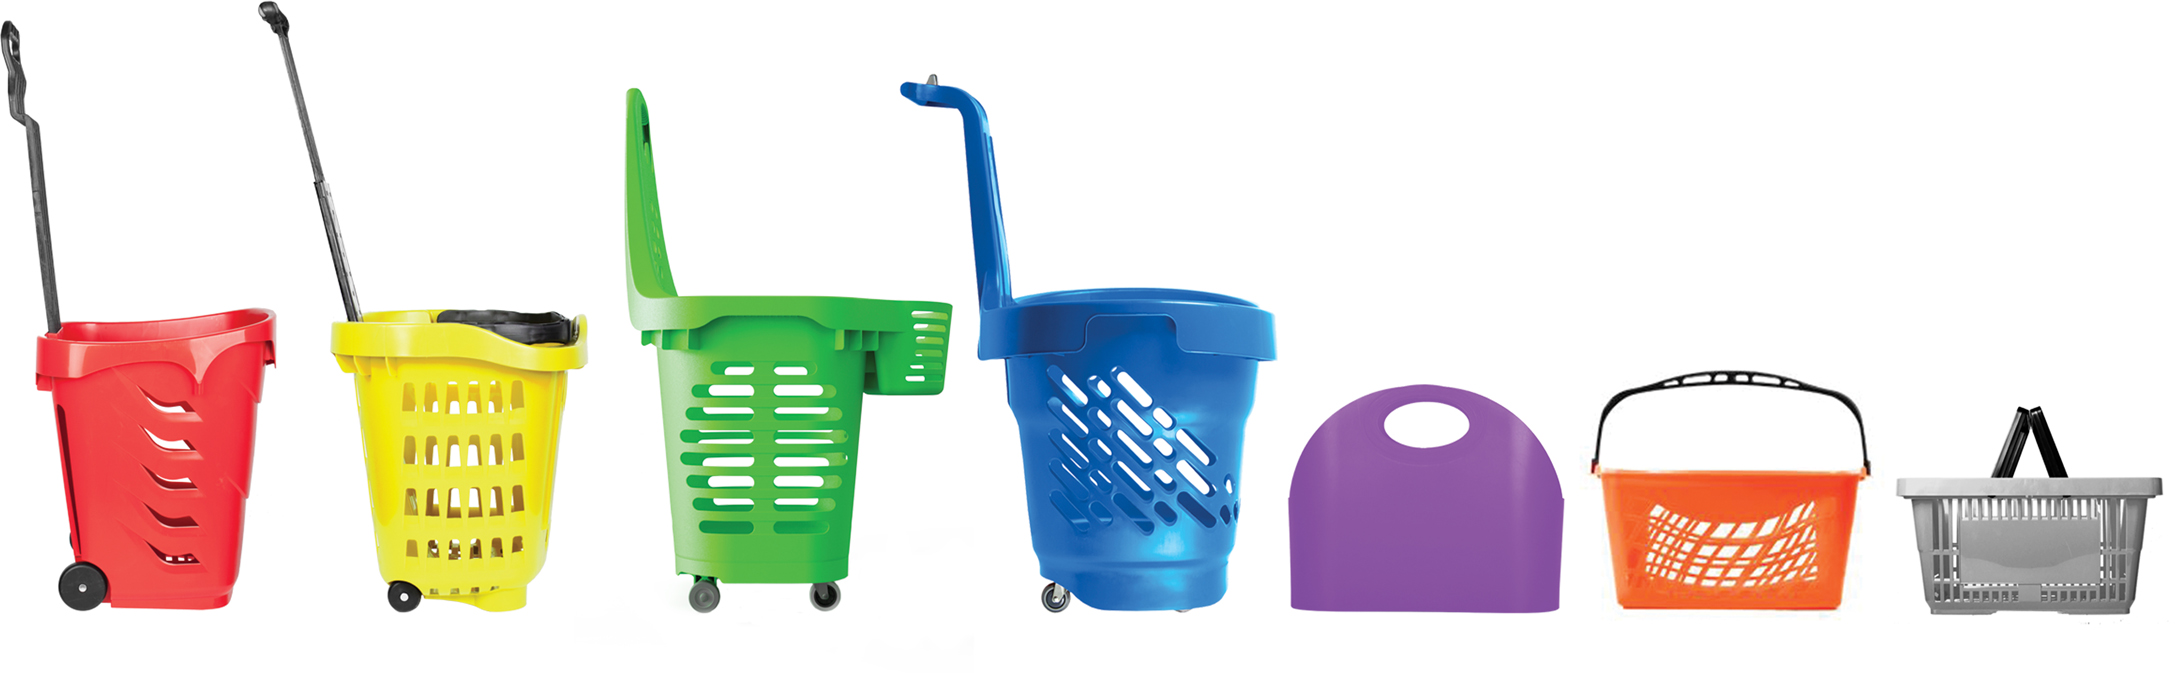 Range of plastic shopping baskets by Joalpe International UK